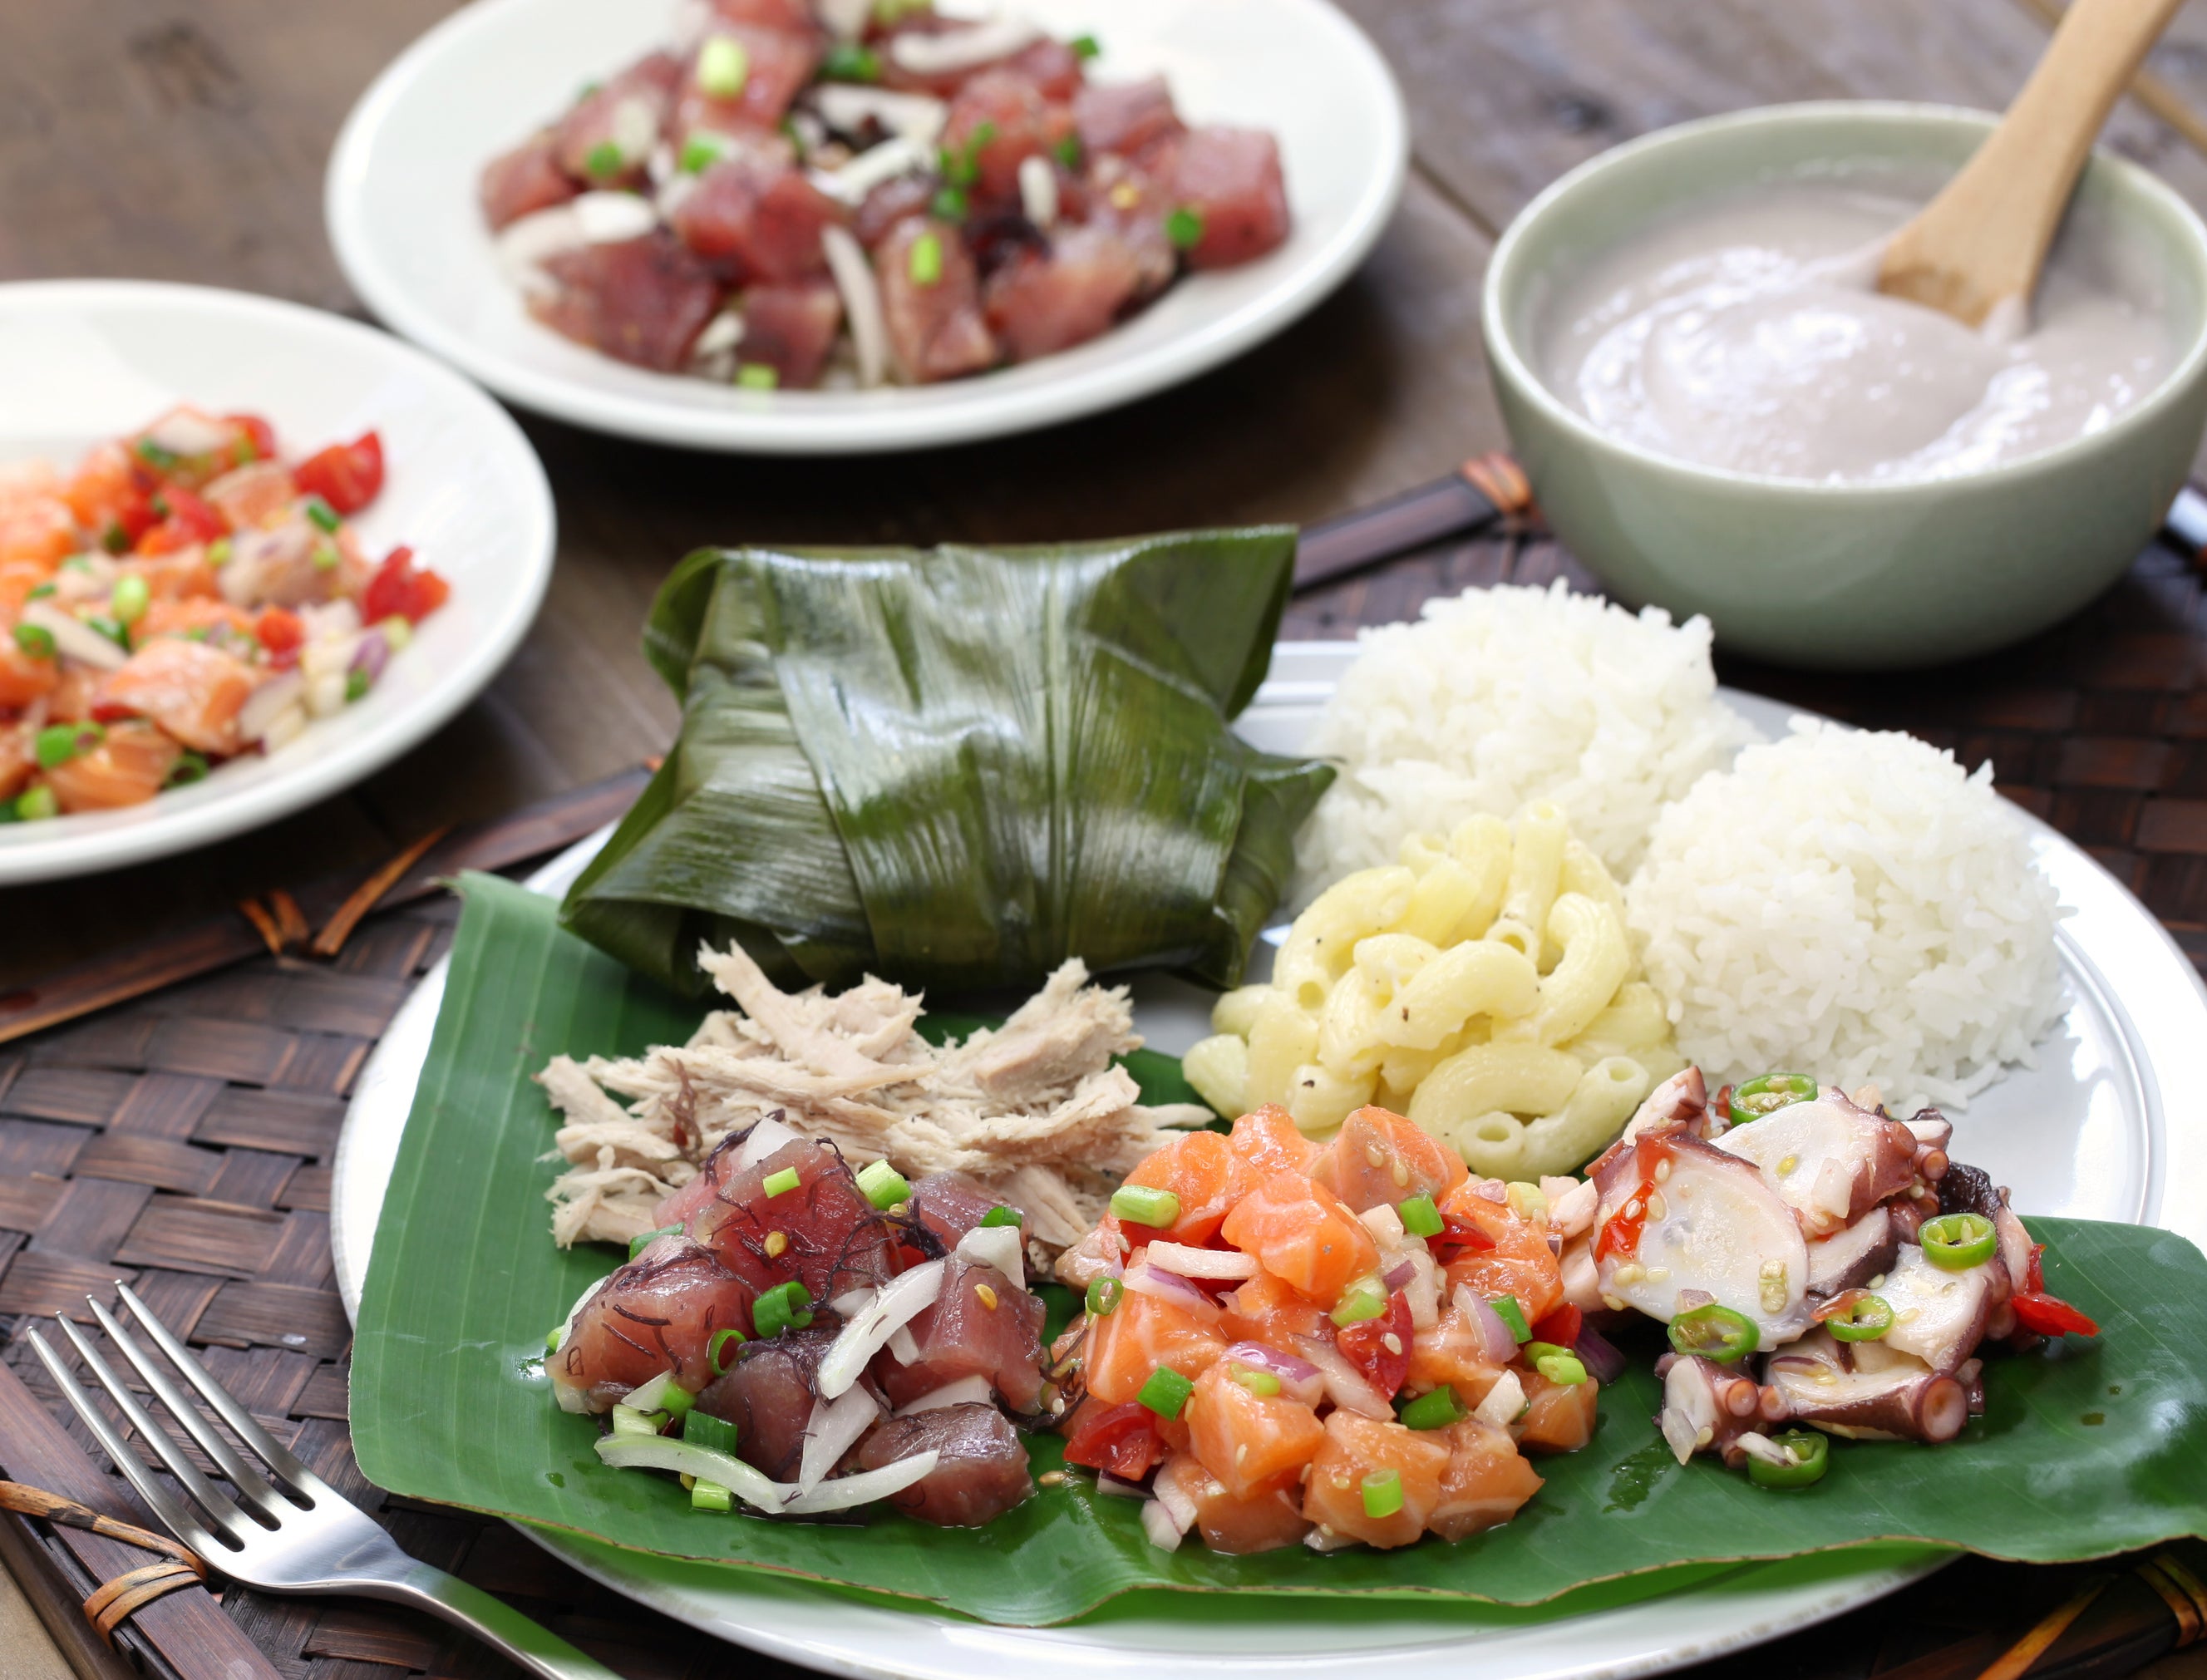 Hawaiian food, including lomi lomi salmon and kalua pork